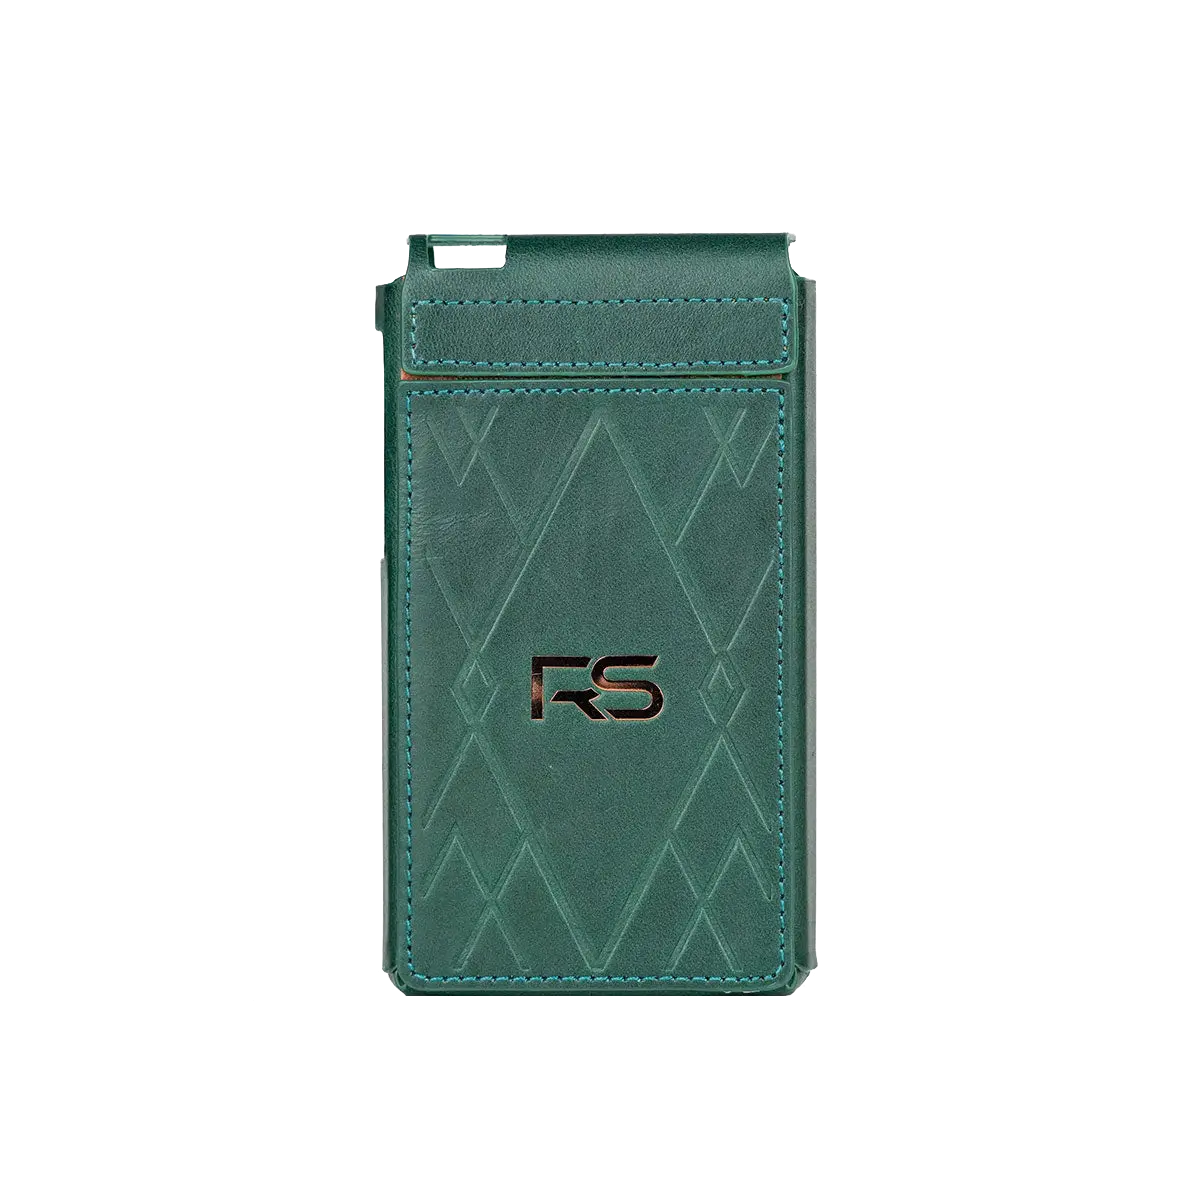 R6 III (Gen 3) leather case - HiBy